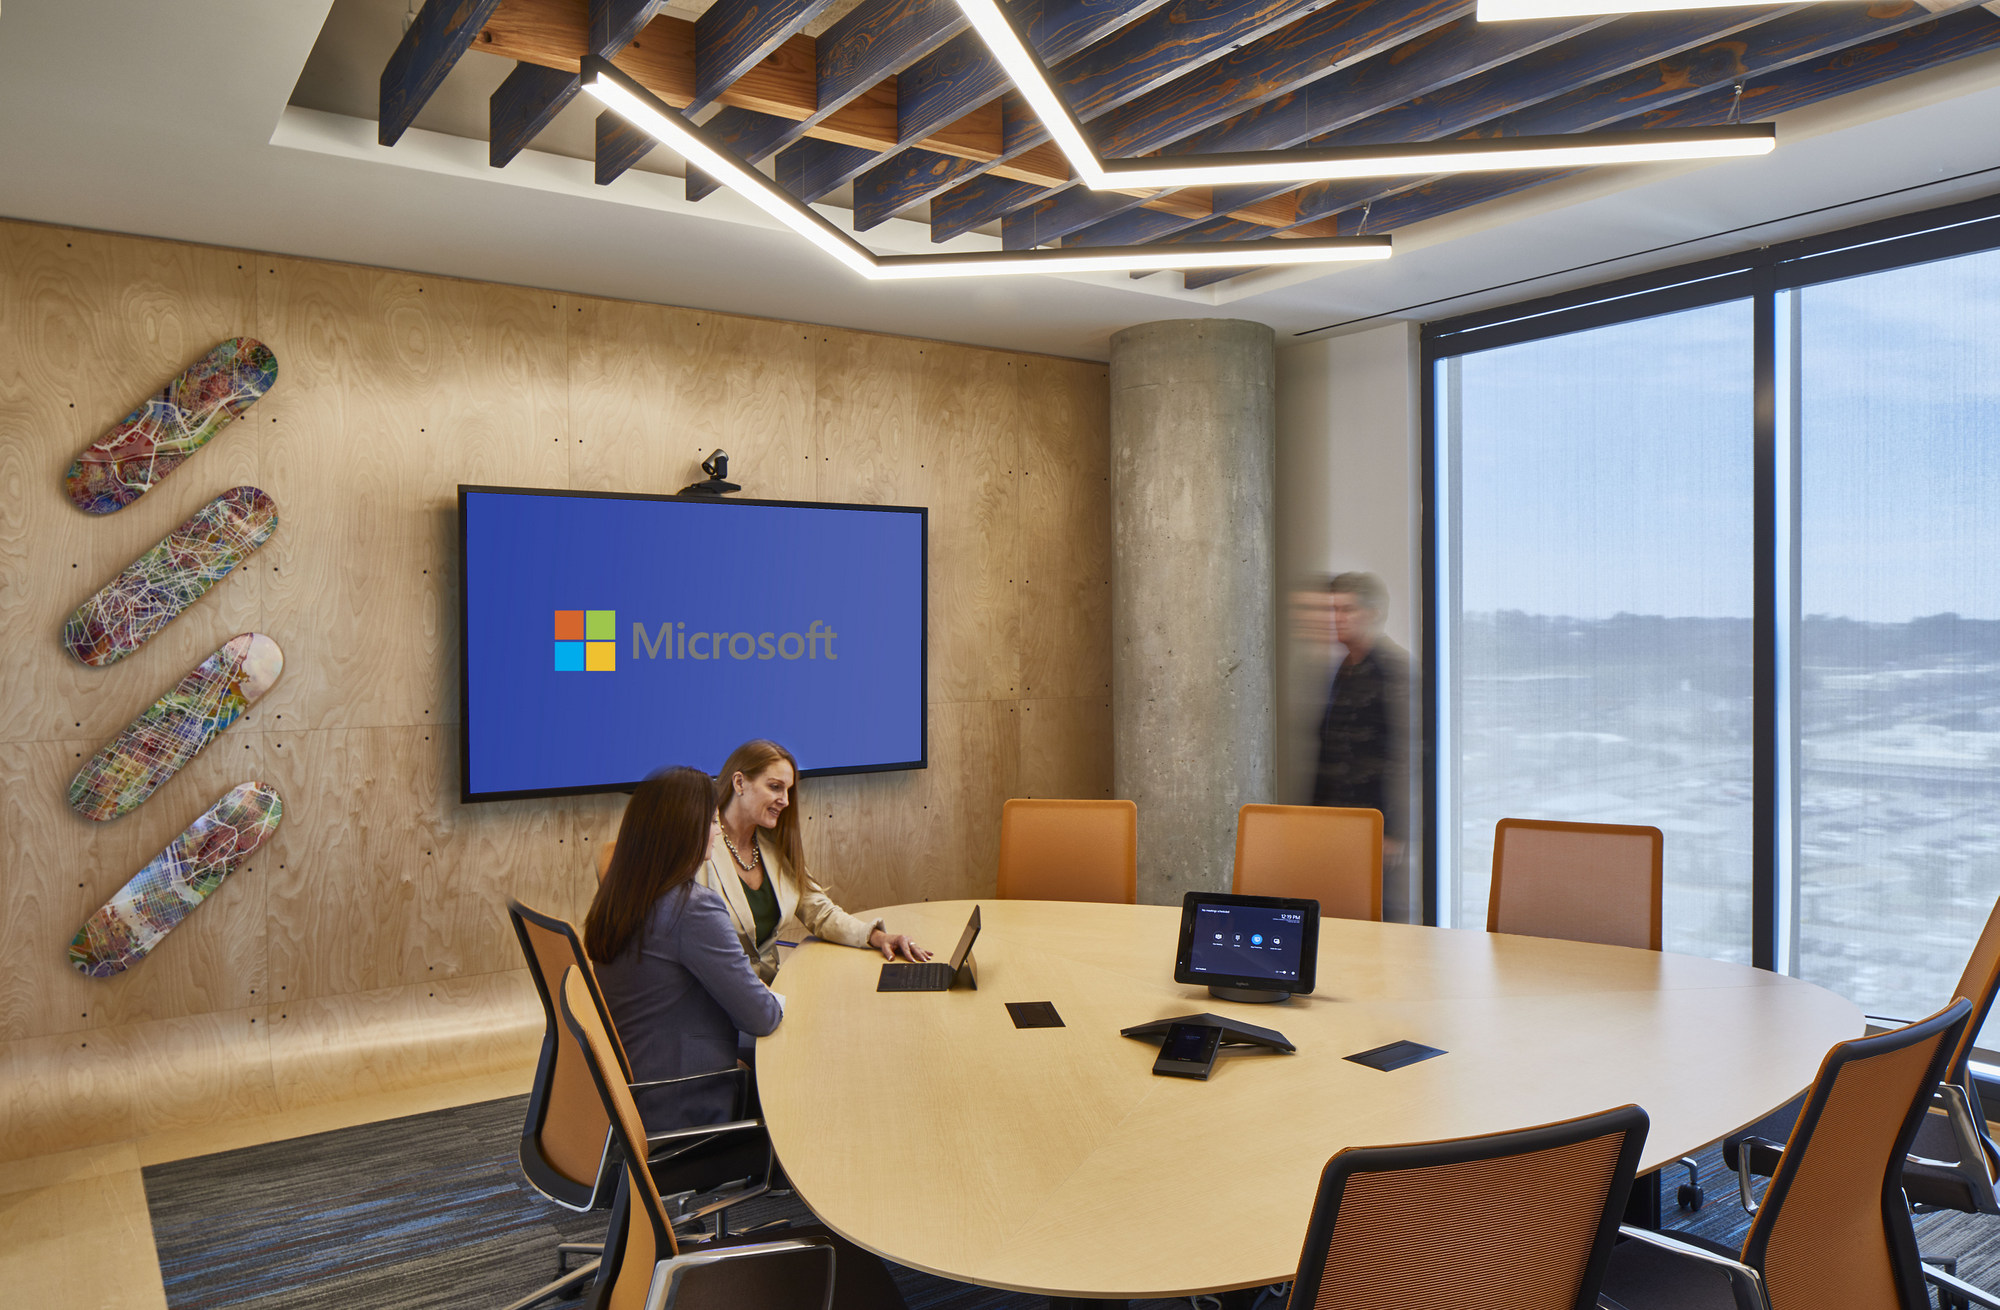 Microsoft(マイクロソフト)のオフィス - アルファレッタ, ジョージア州の会議室/ミーティングスペース